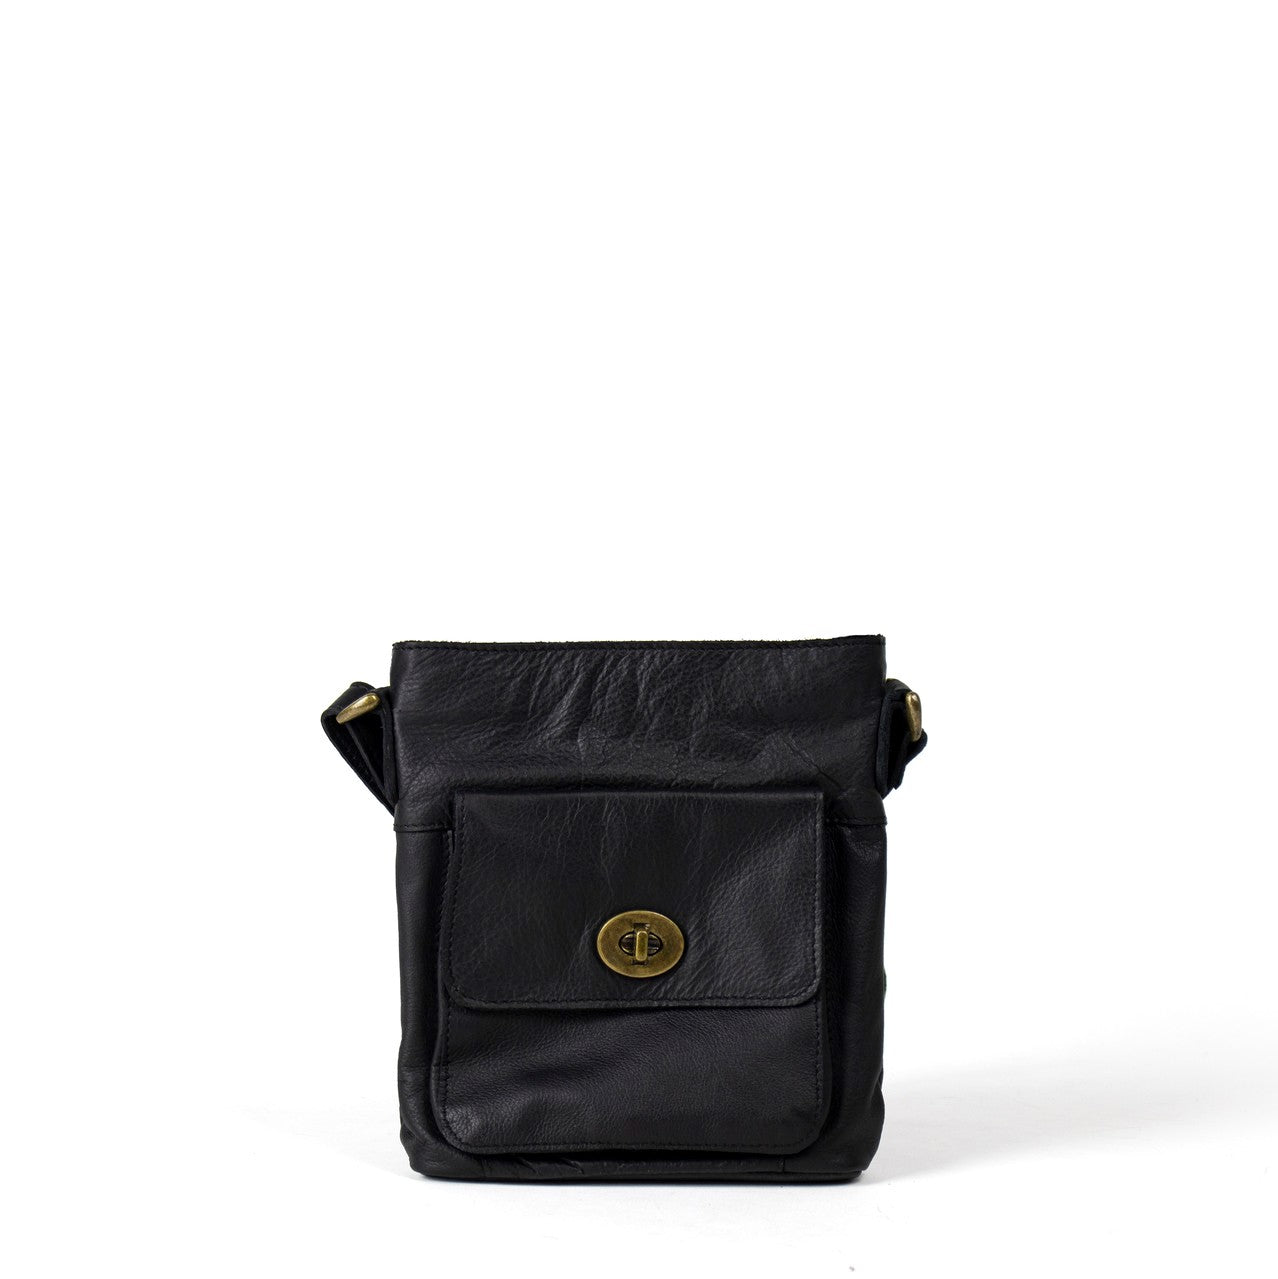 Kay Small Urban Bag Black